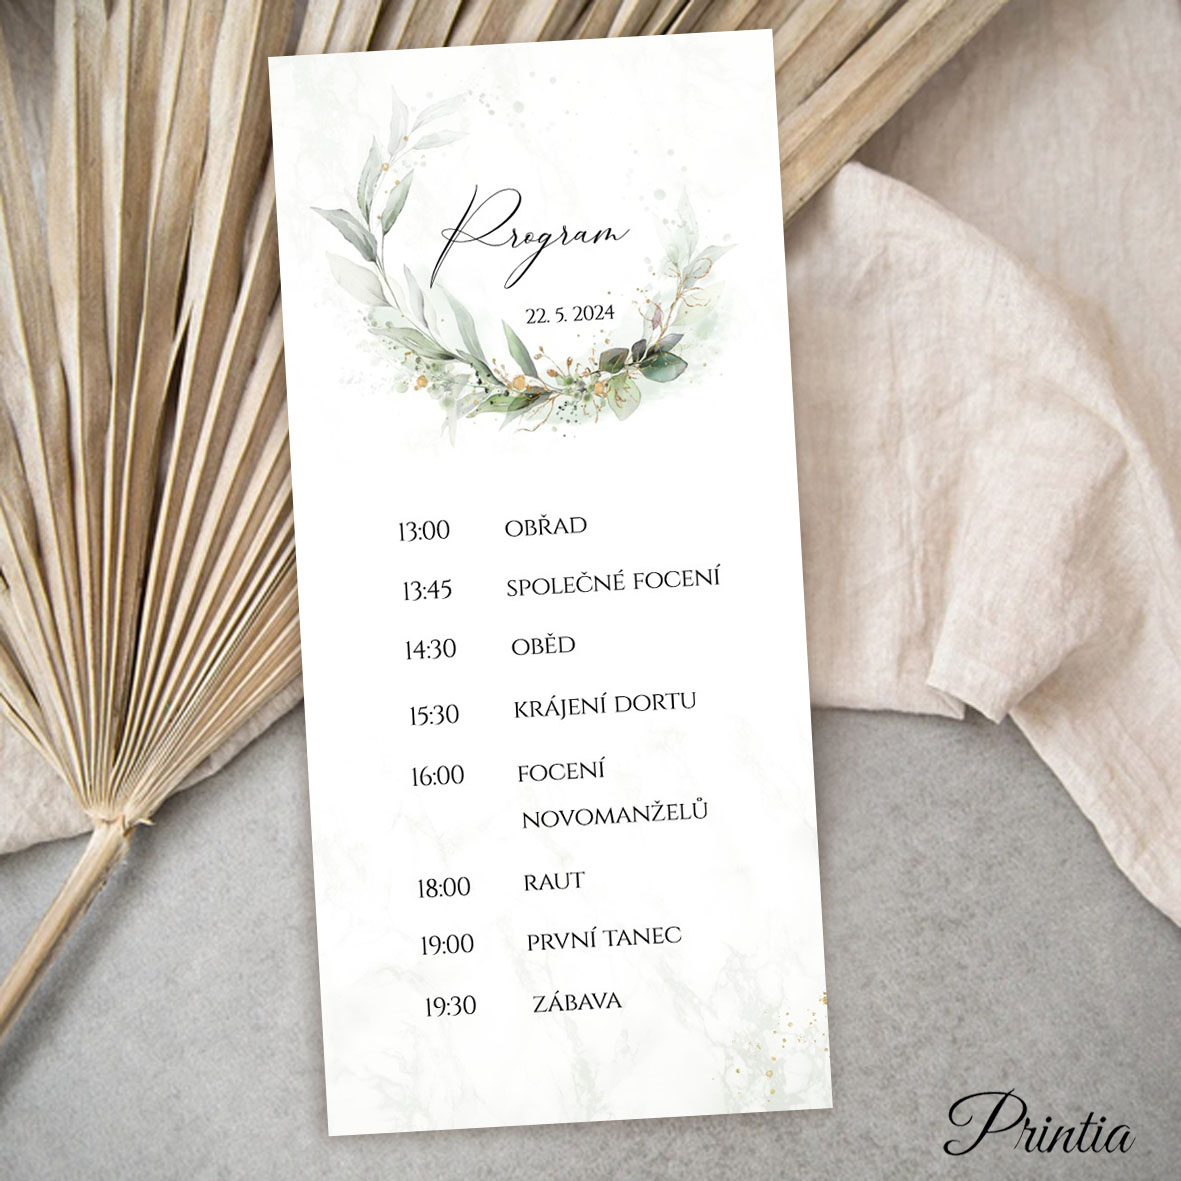 Wedding day timeline with plant wreath